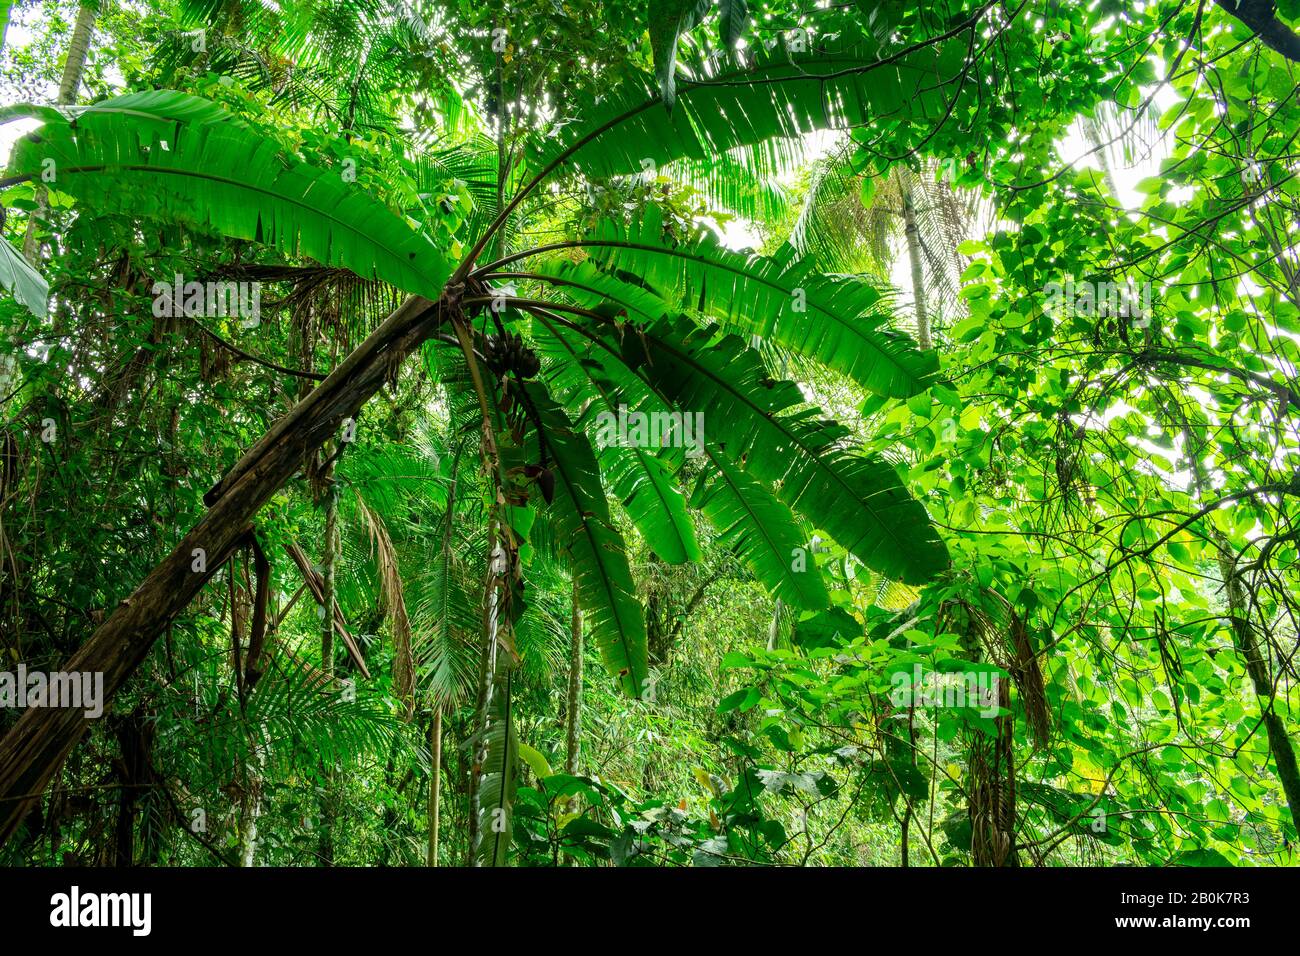 Banana tree in a tropical rainforest enviroment in Brazil Stock Photo